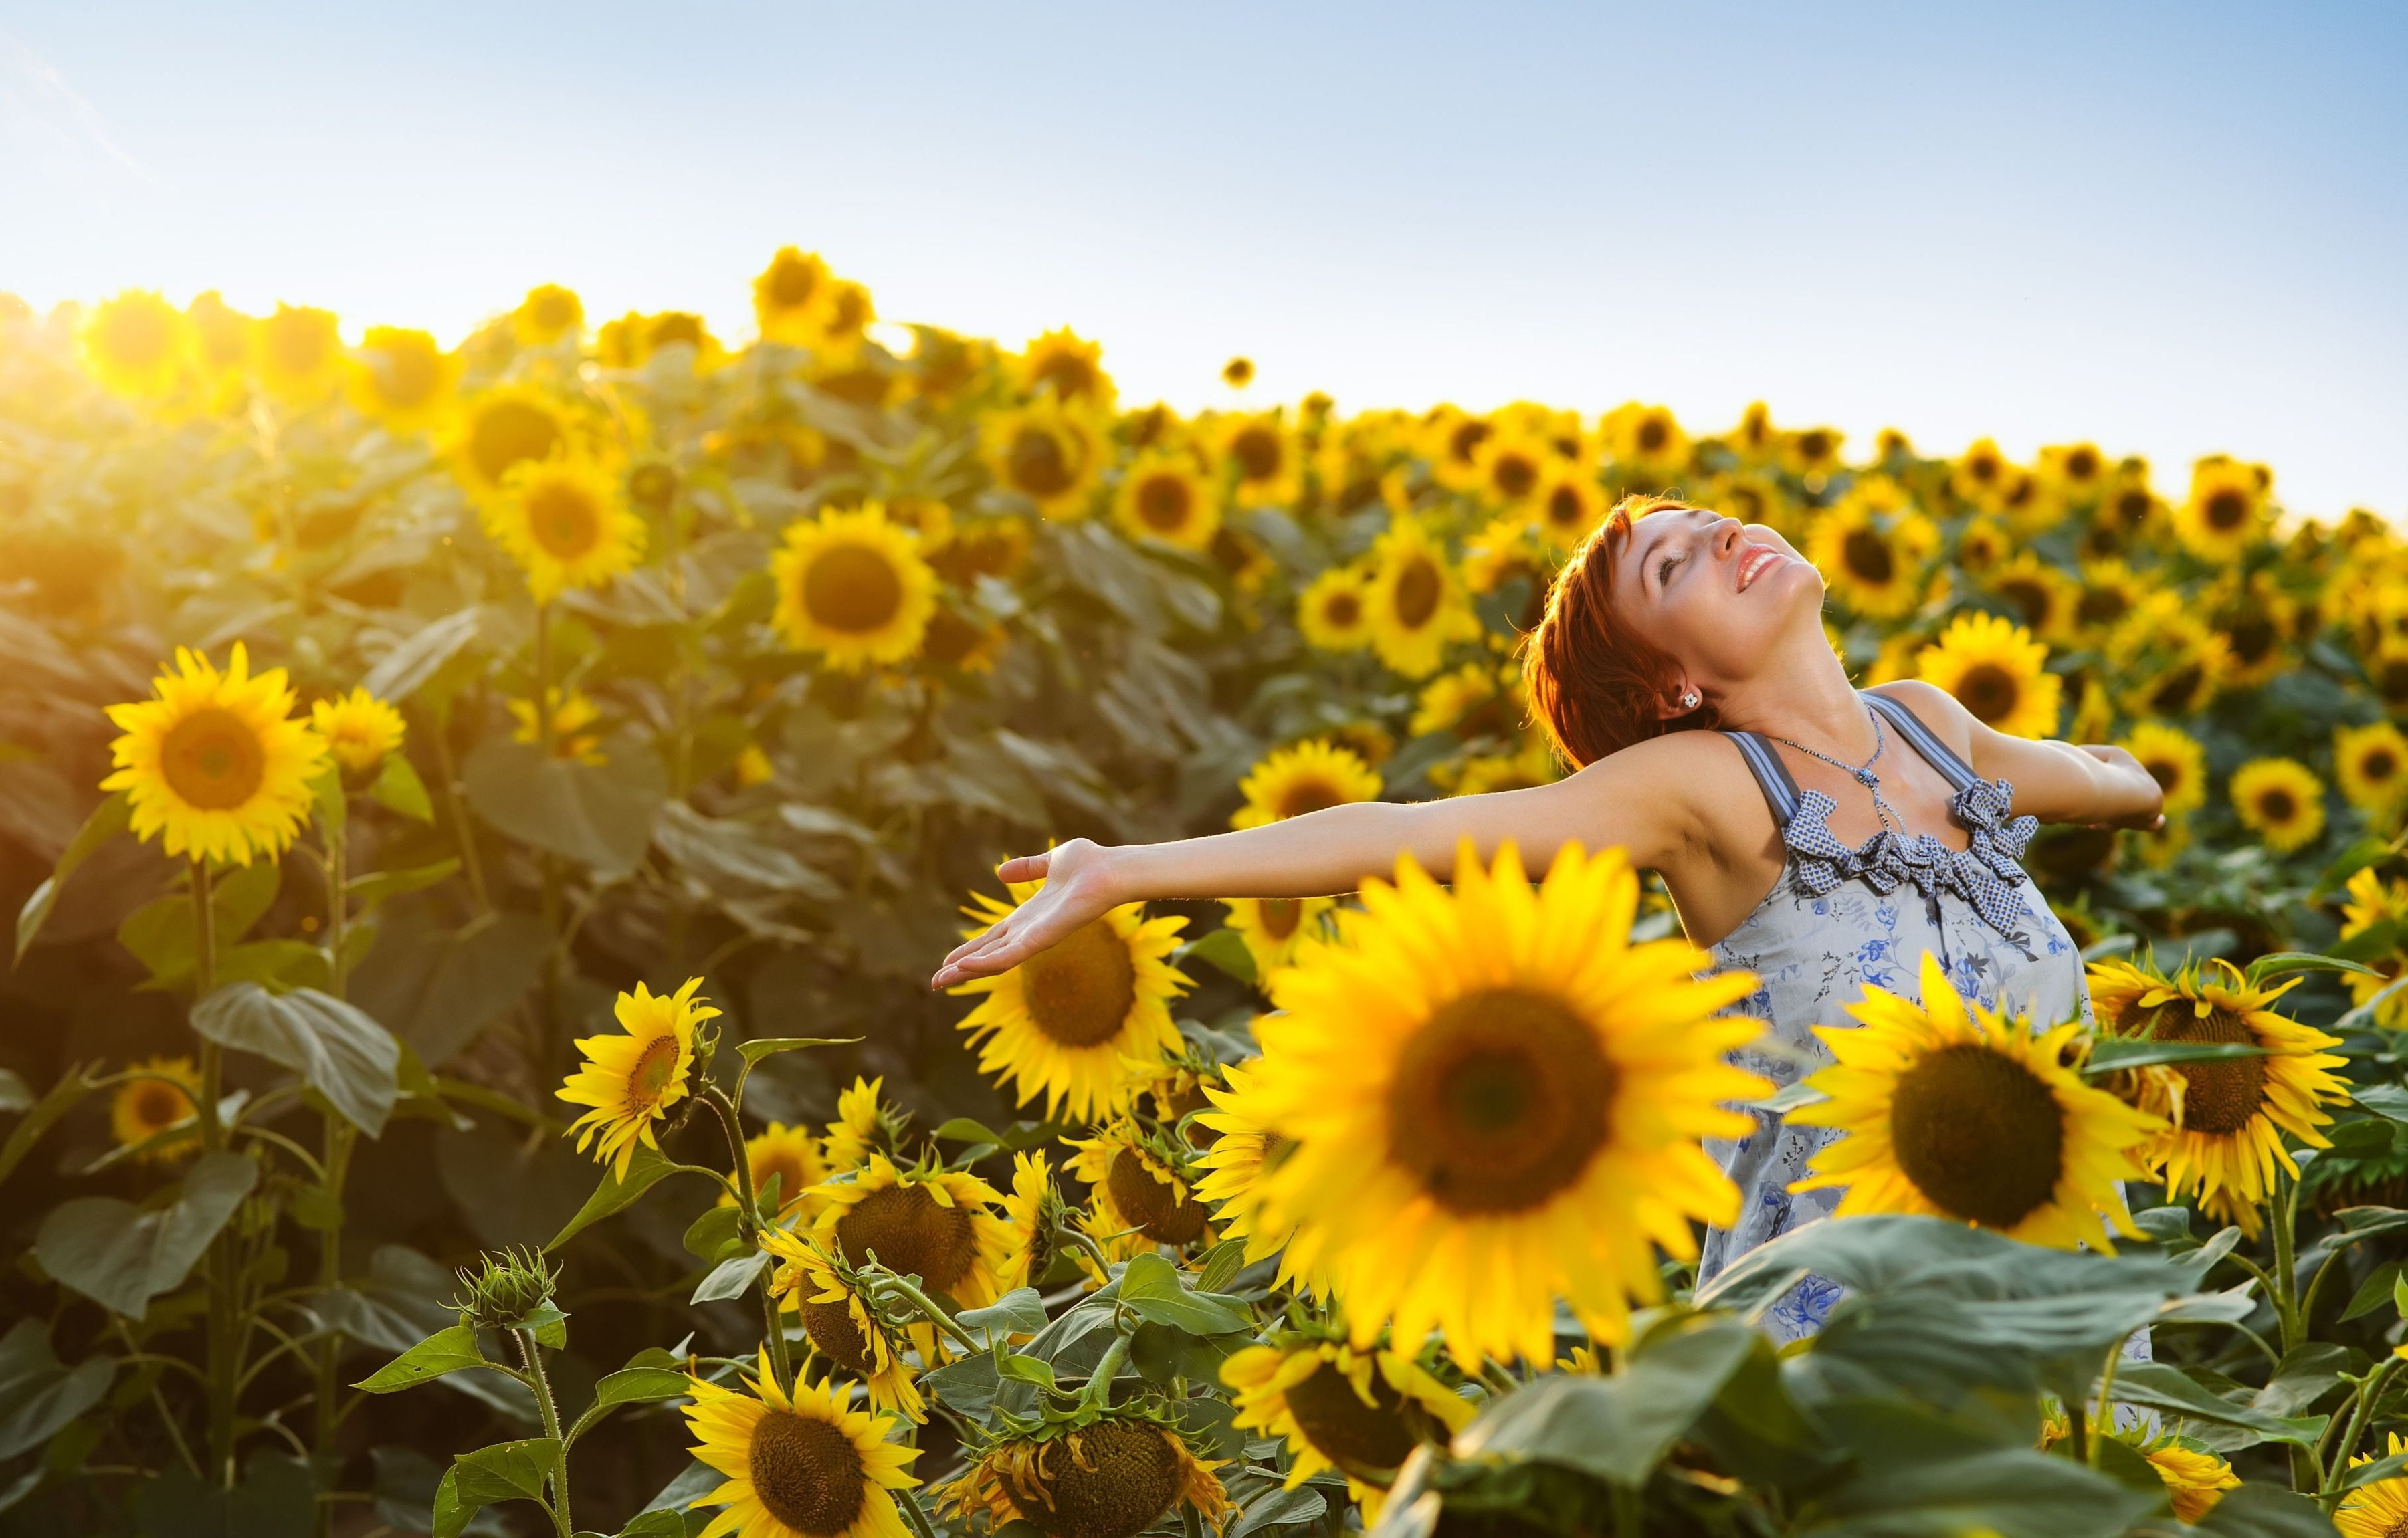 sunflower field, the sky, girl, joy, happiness, sunflowers, yellow